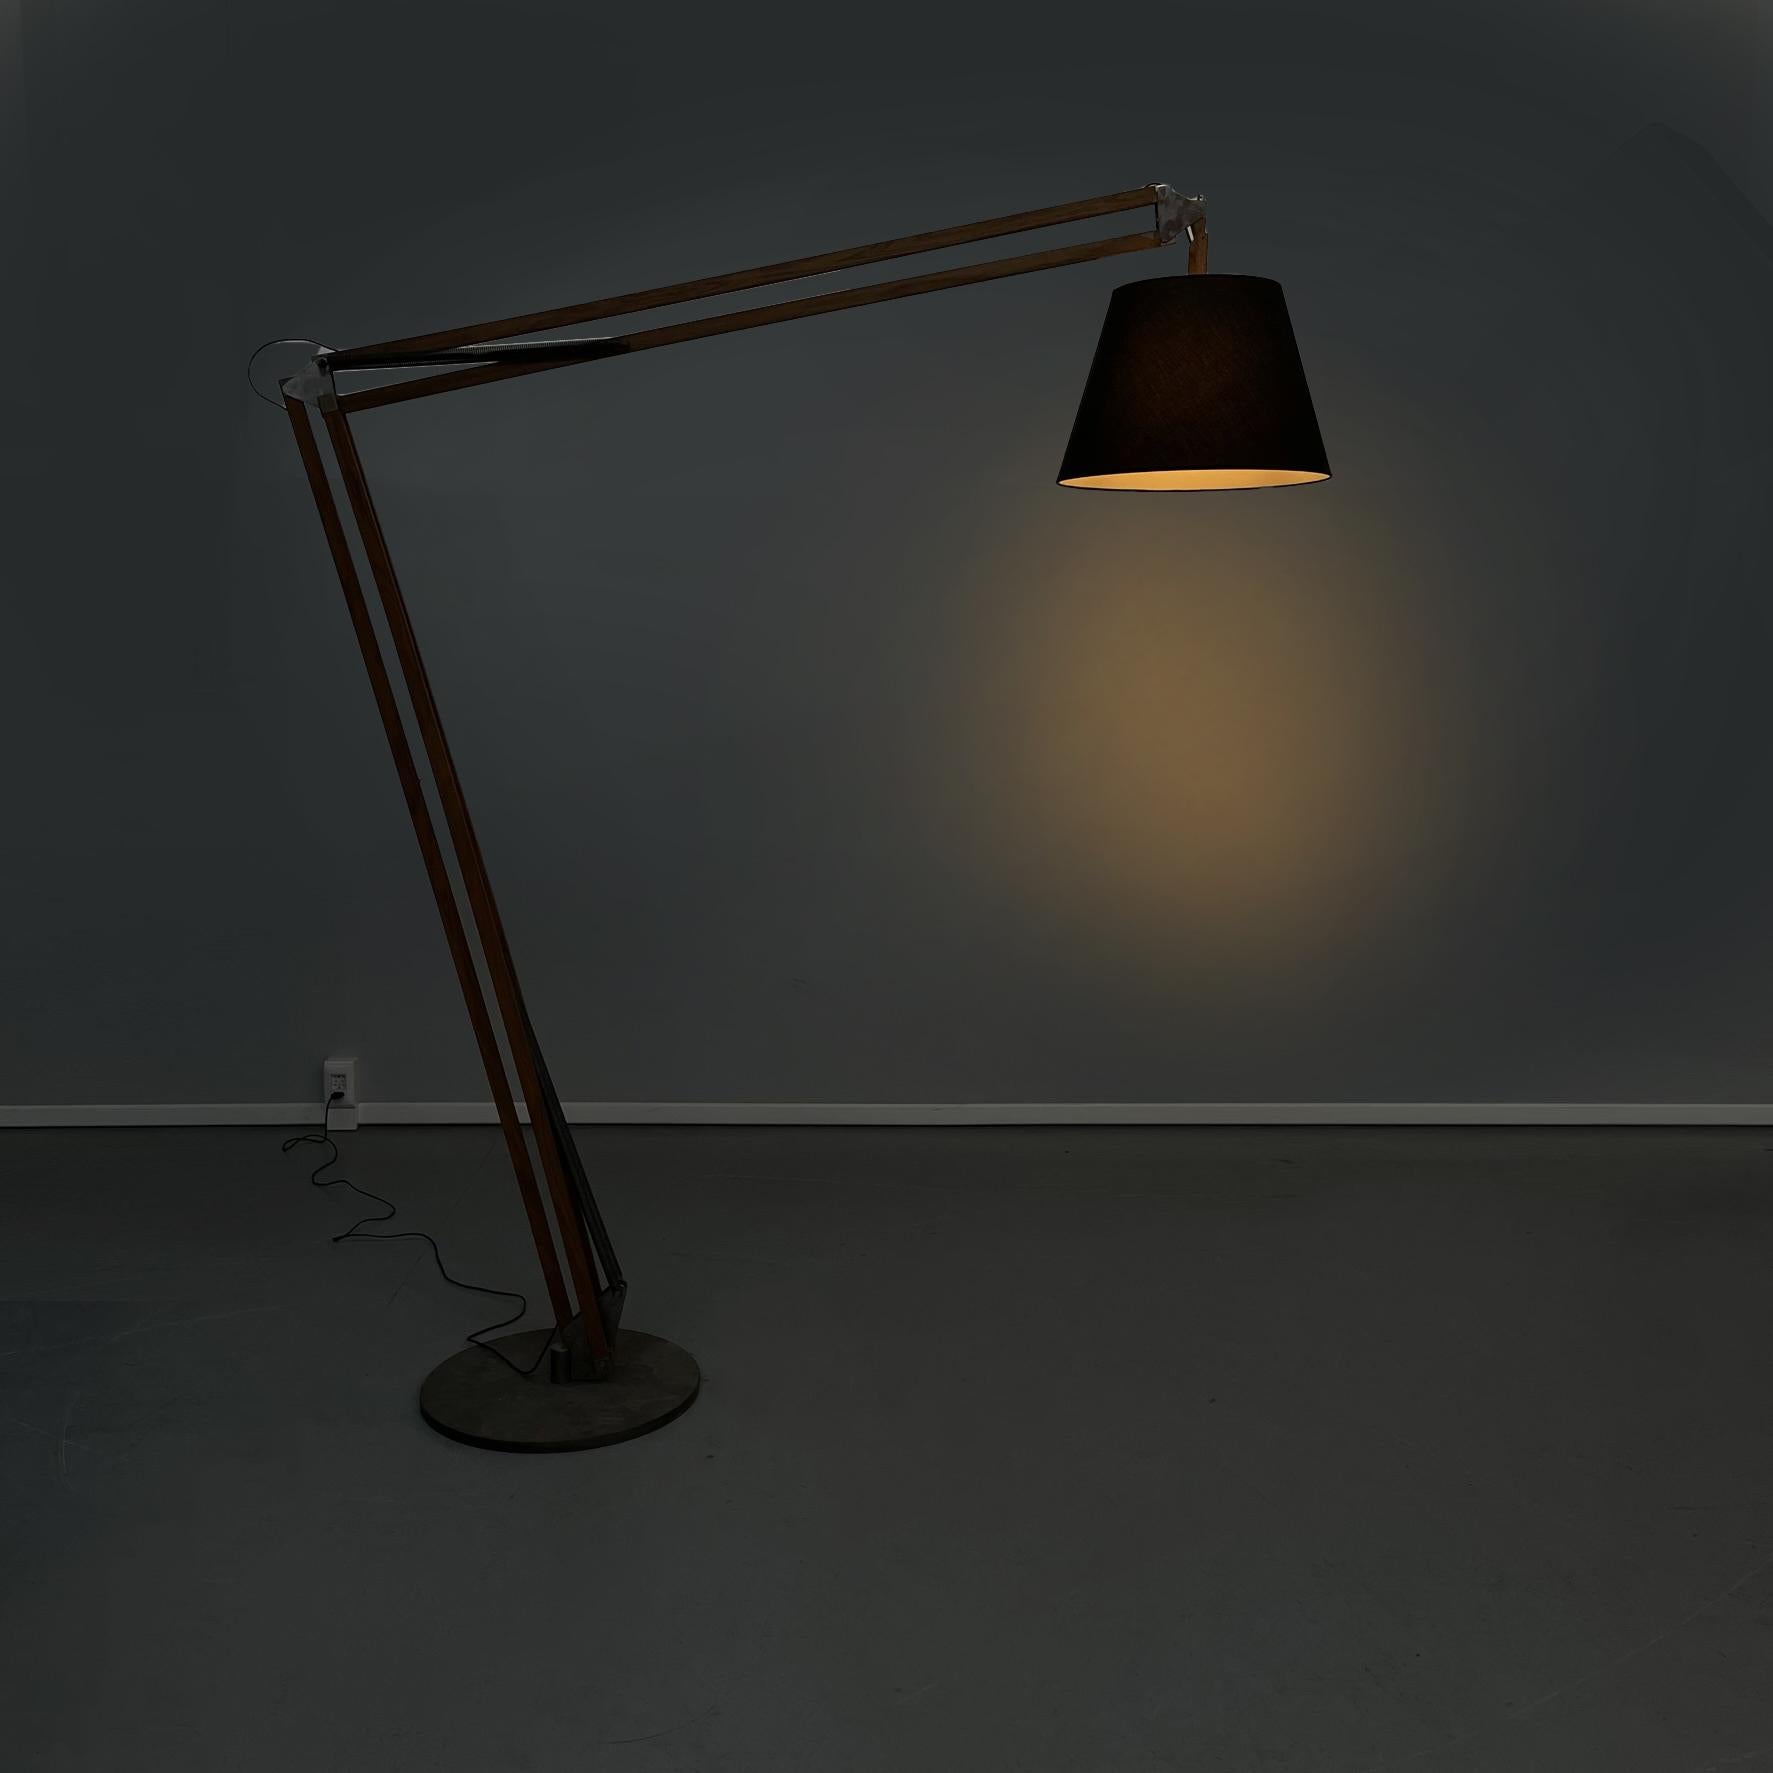 2000s lamp